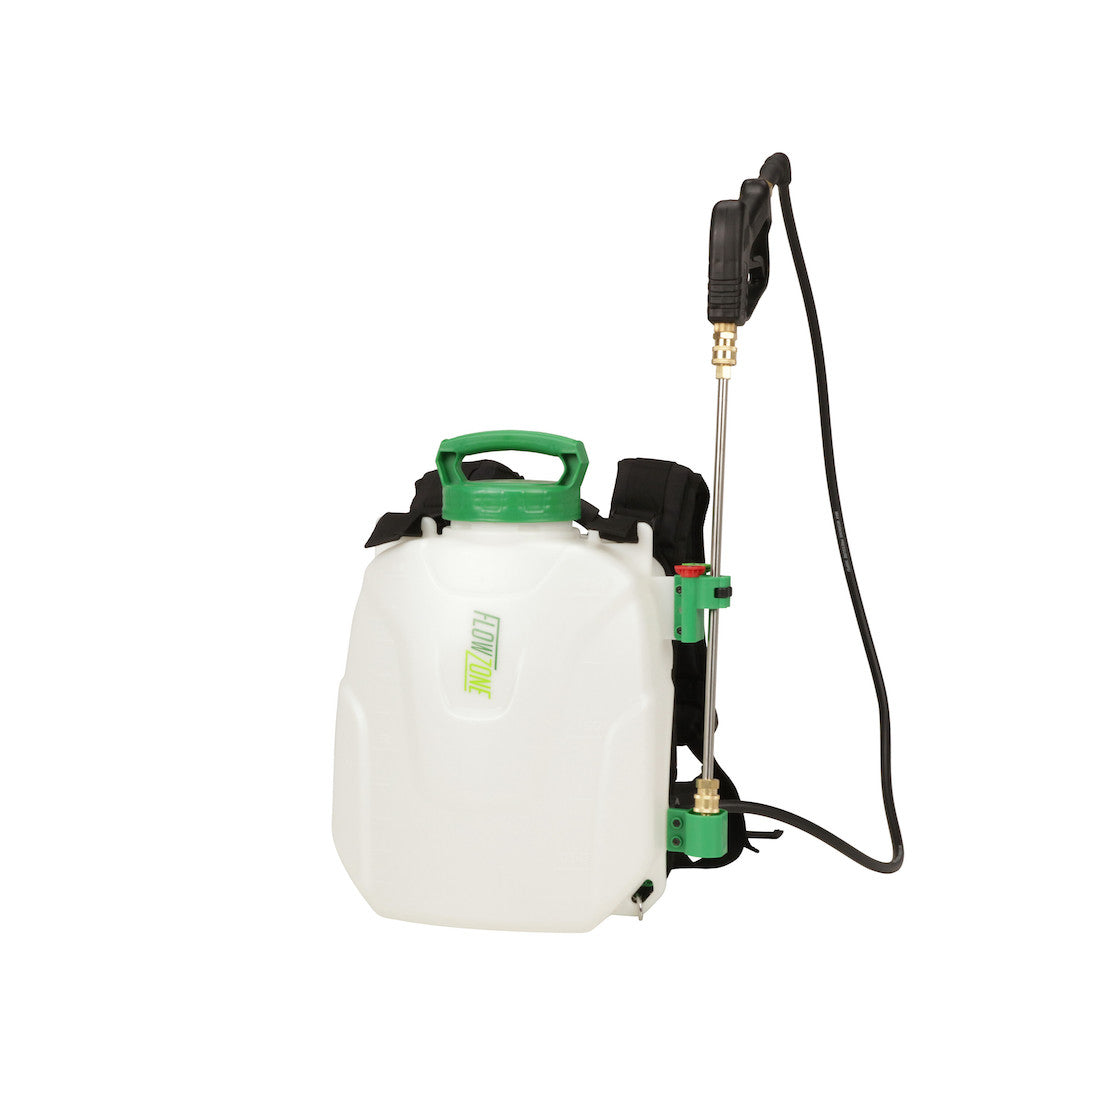 Storm 2.5 Variable Pressure 5-Position Battery Backpack Sprayer (2.5-Gallon)